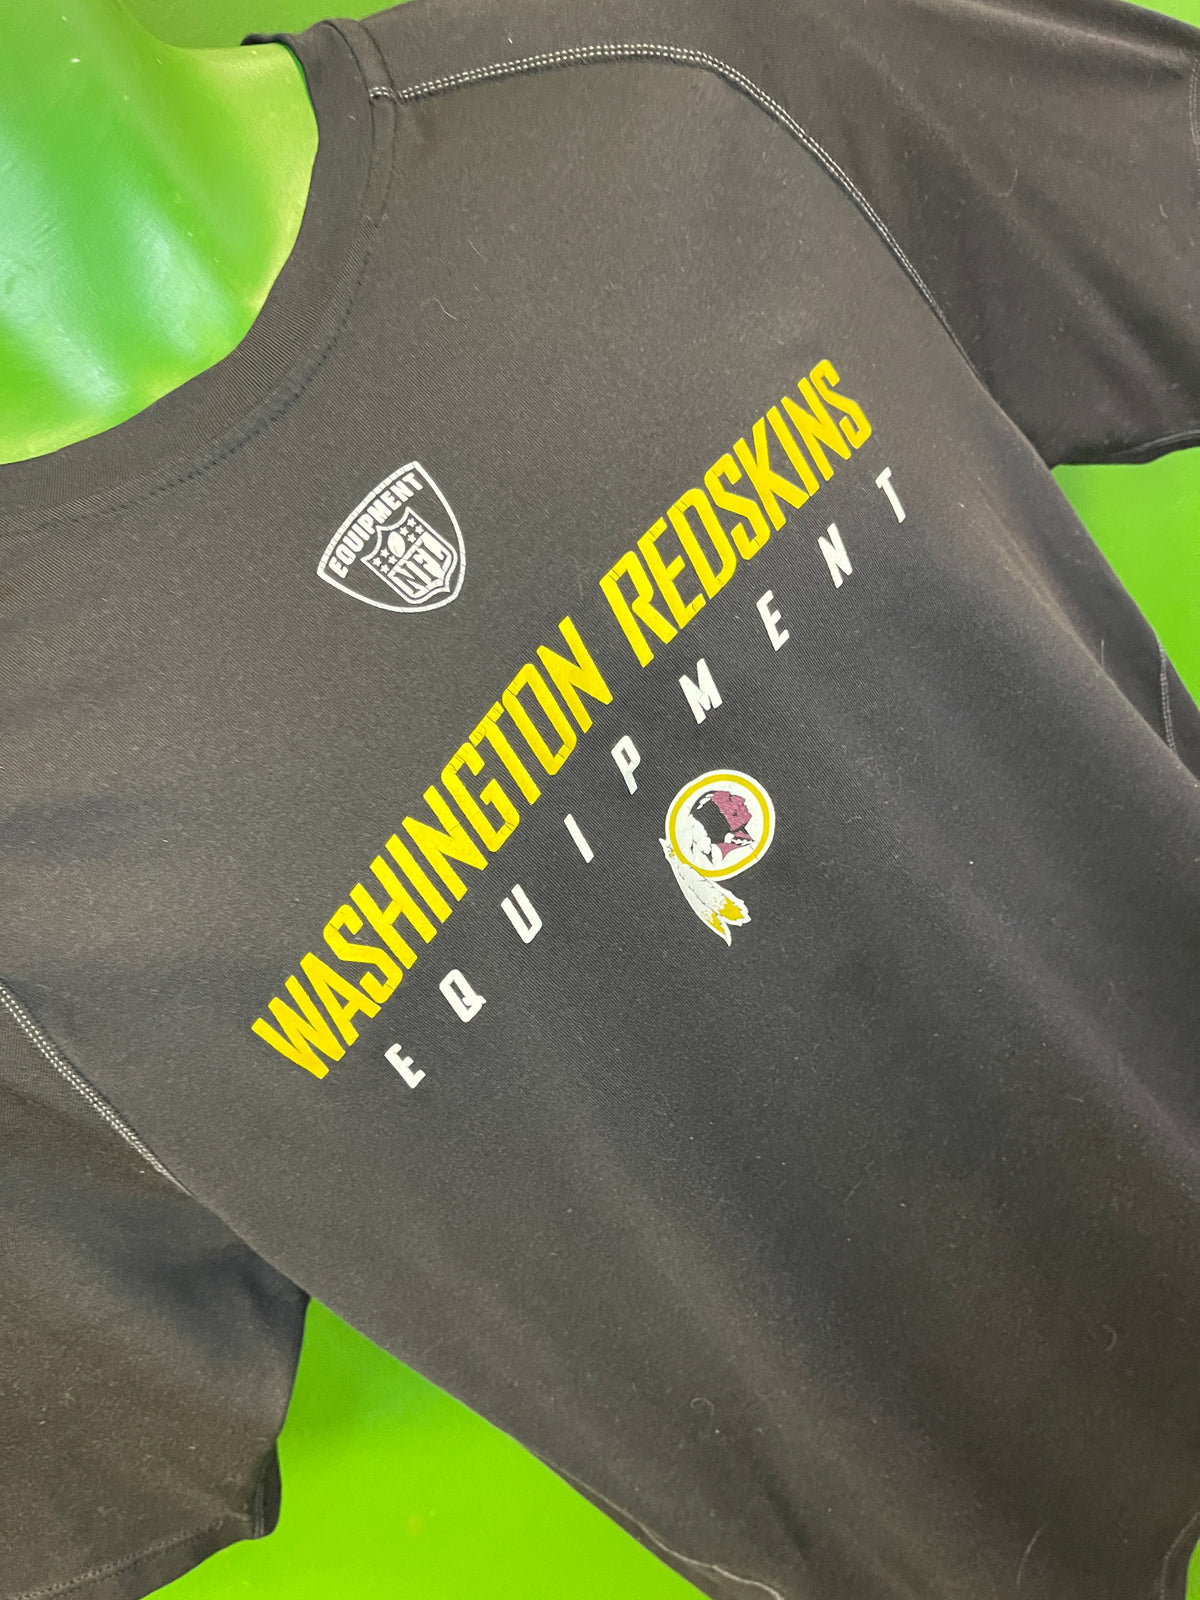 NFL Washington Commanders (Redskins) Speedwick T-Shirt Men's Small